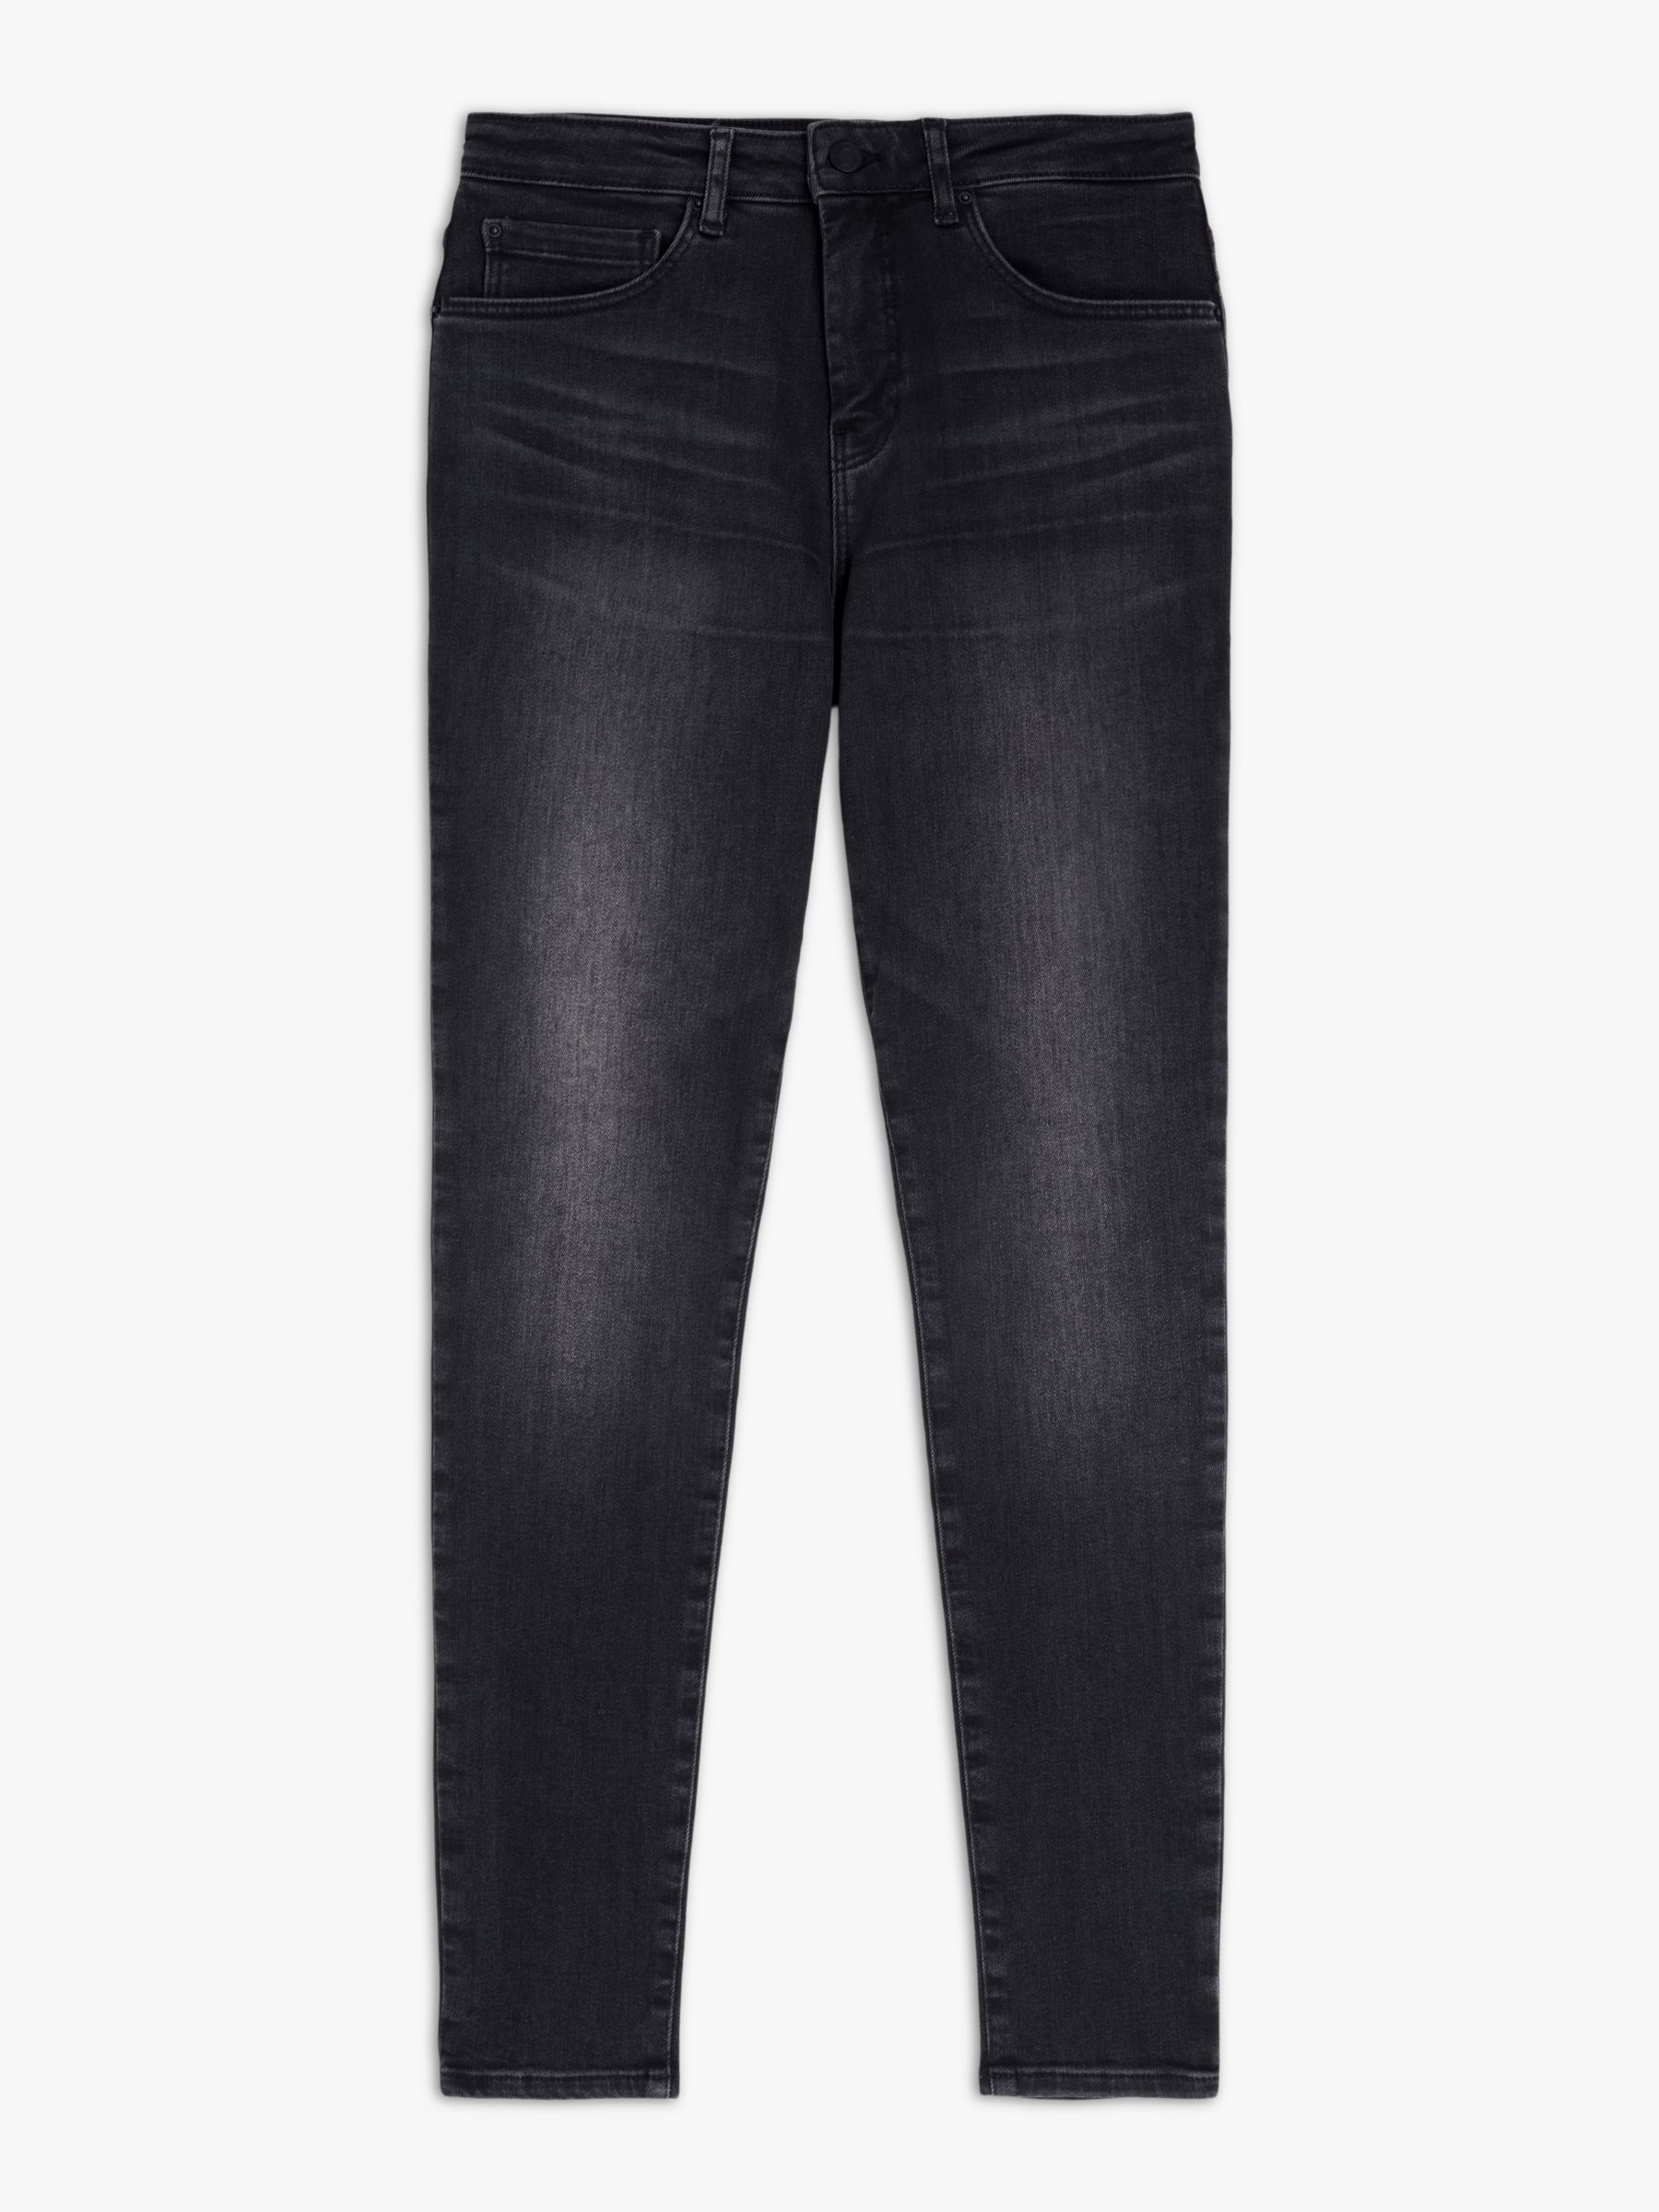 John Lewis Premium Skinny Jeans, Black Wash, 8